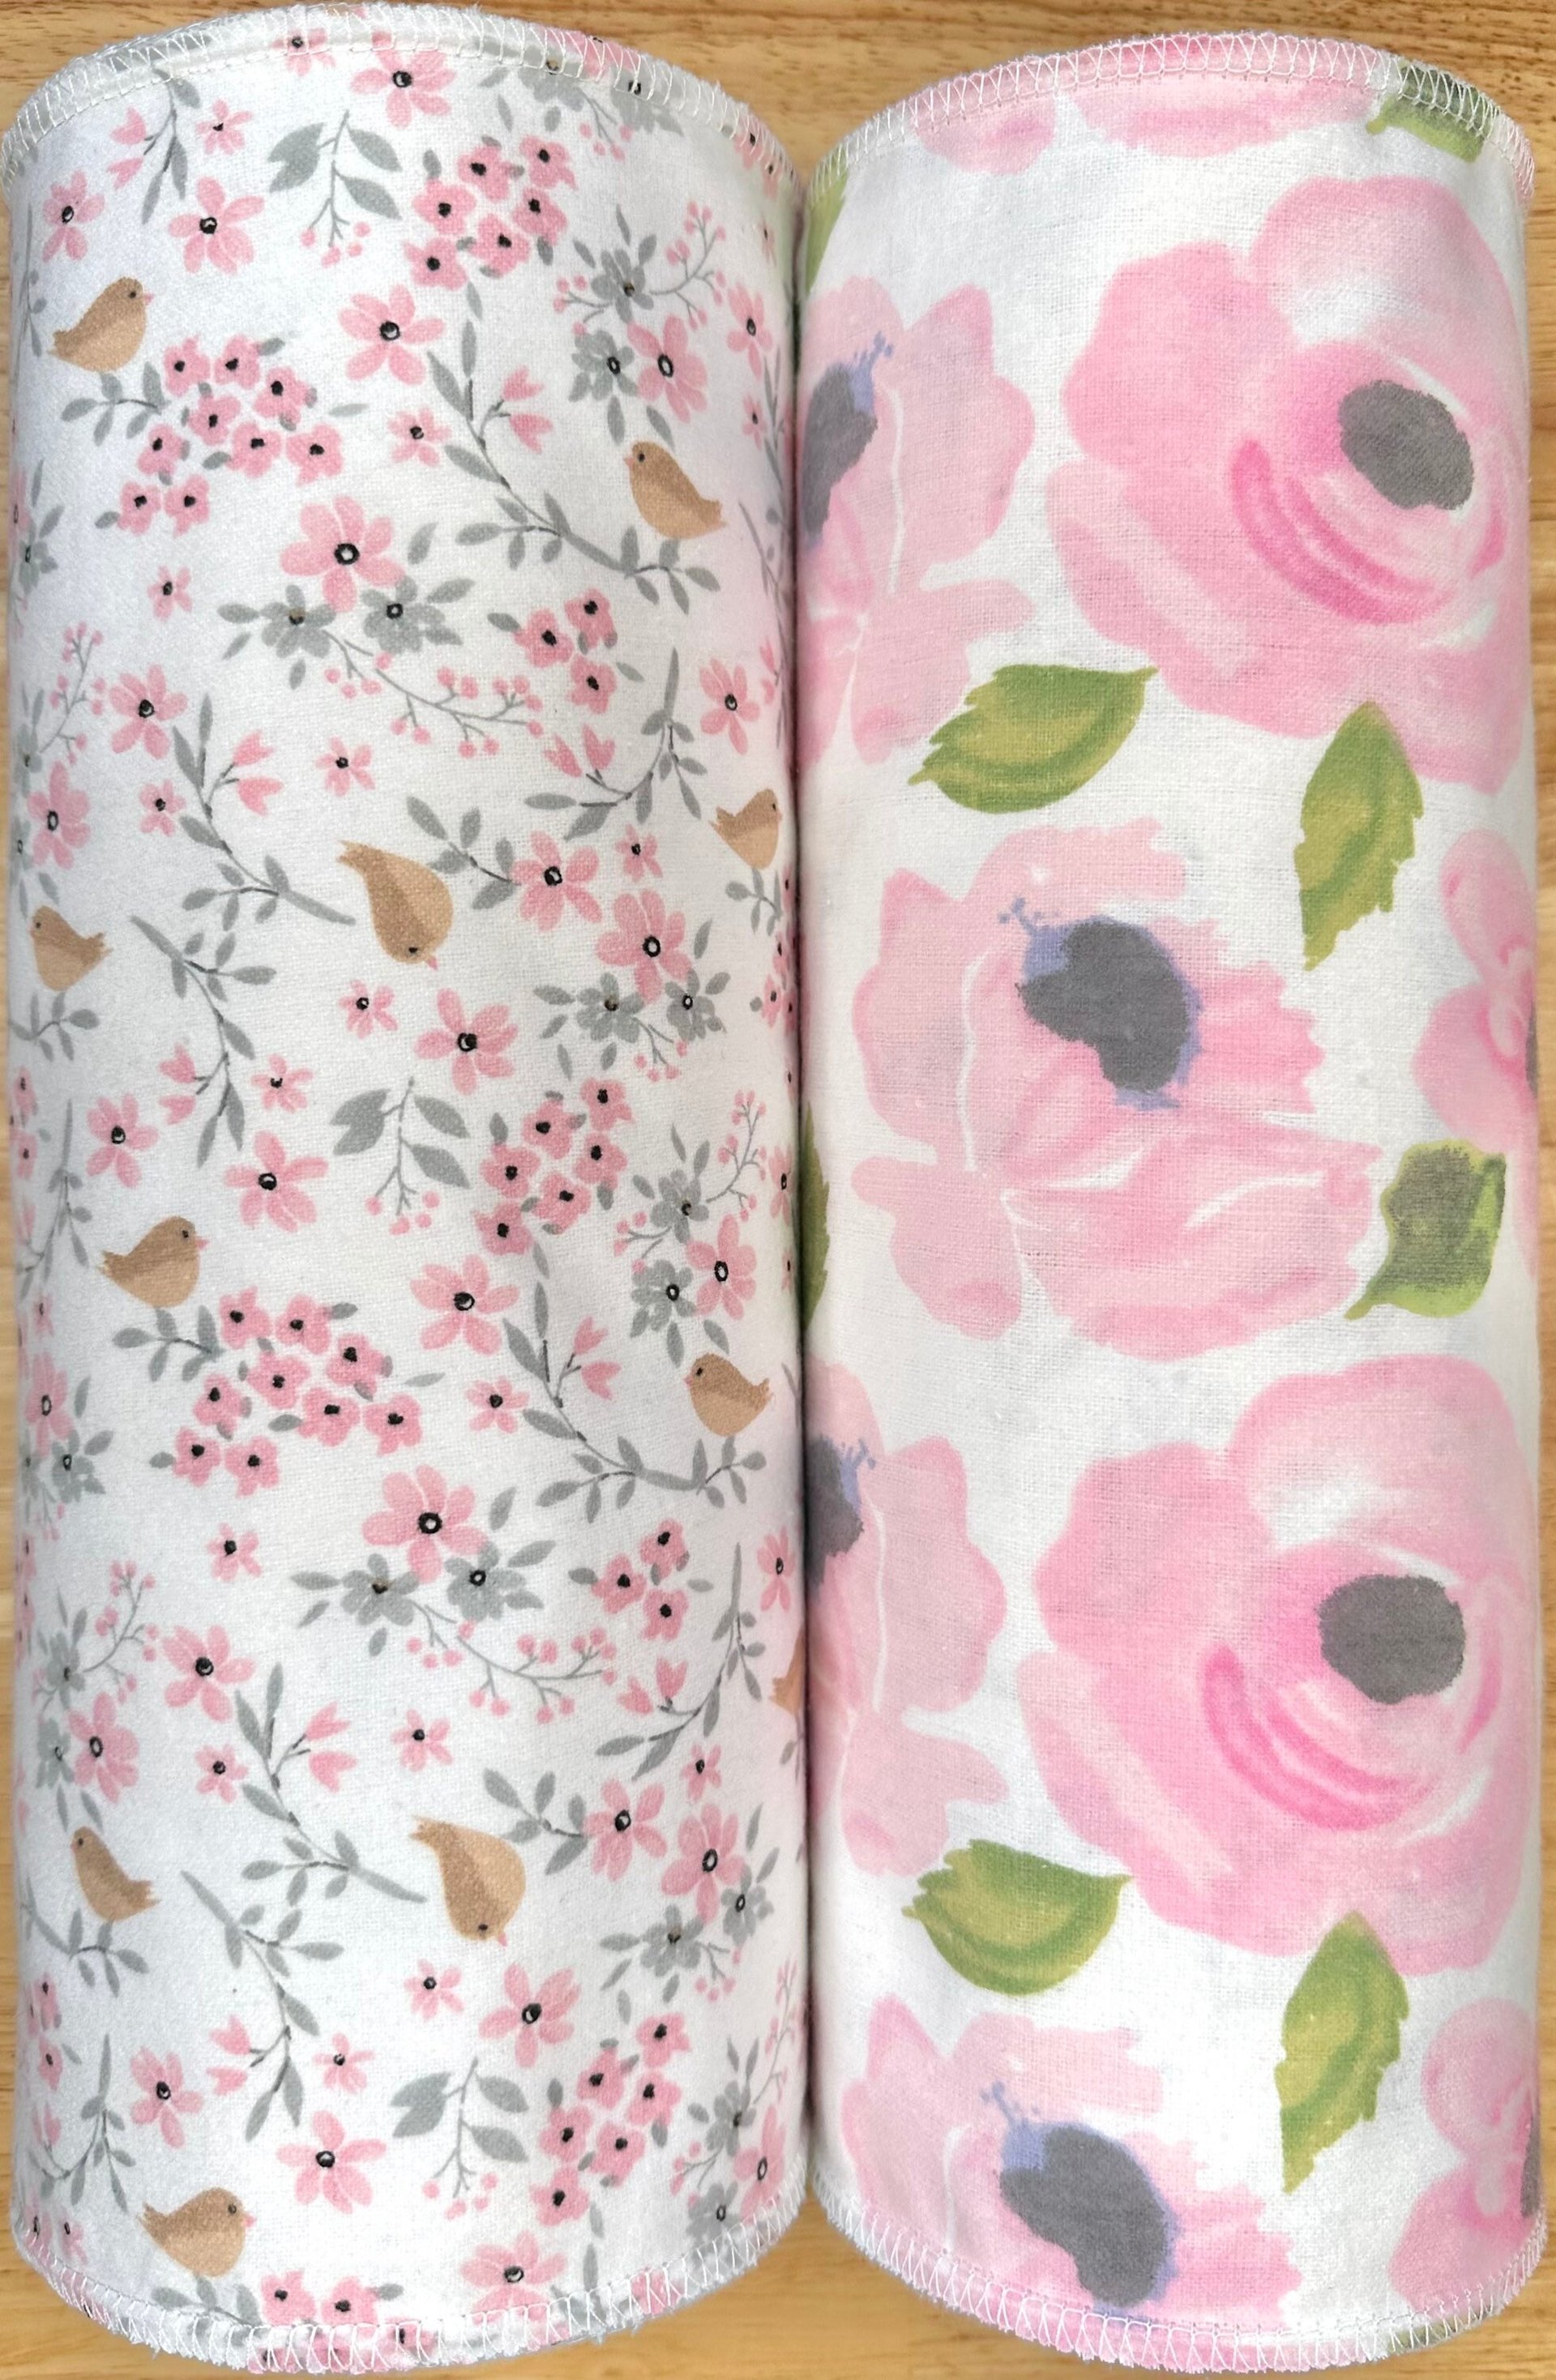 Pink Flowers Paperless Towels || Unpaper Towels Flowers || Zero-Waste || Cloth Napkins